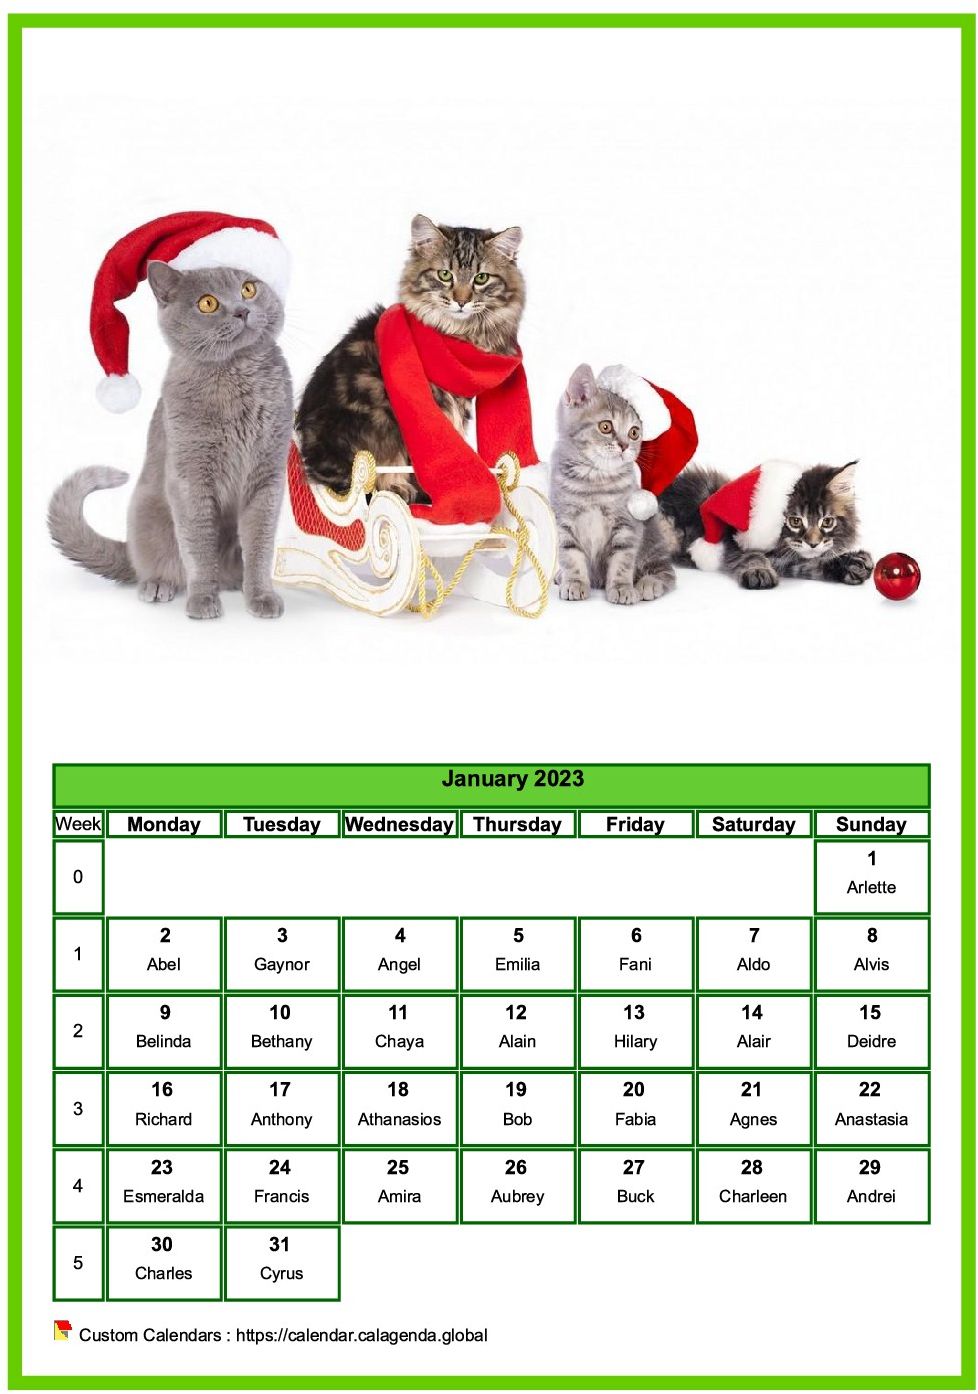 Calendar January 2023 Cats